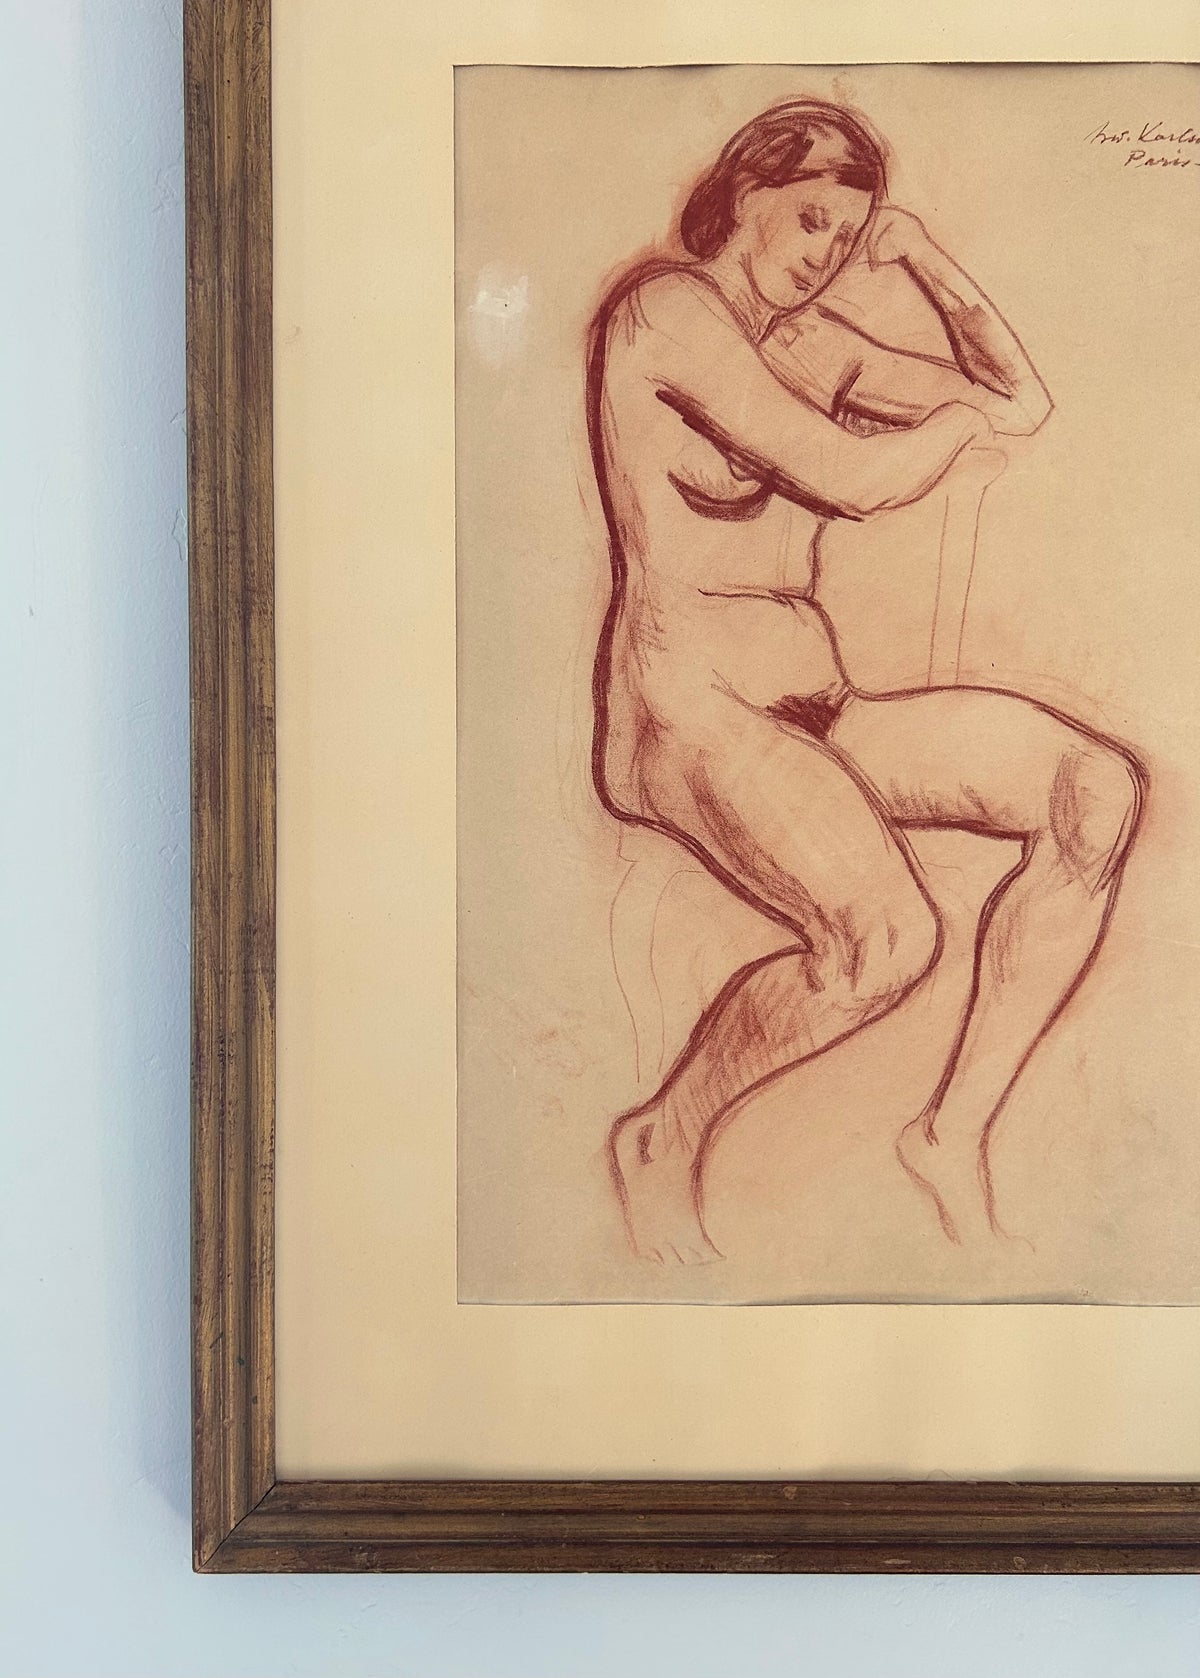 Parisian nude study 22” x 27.5”